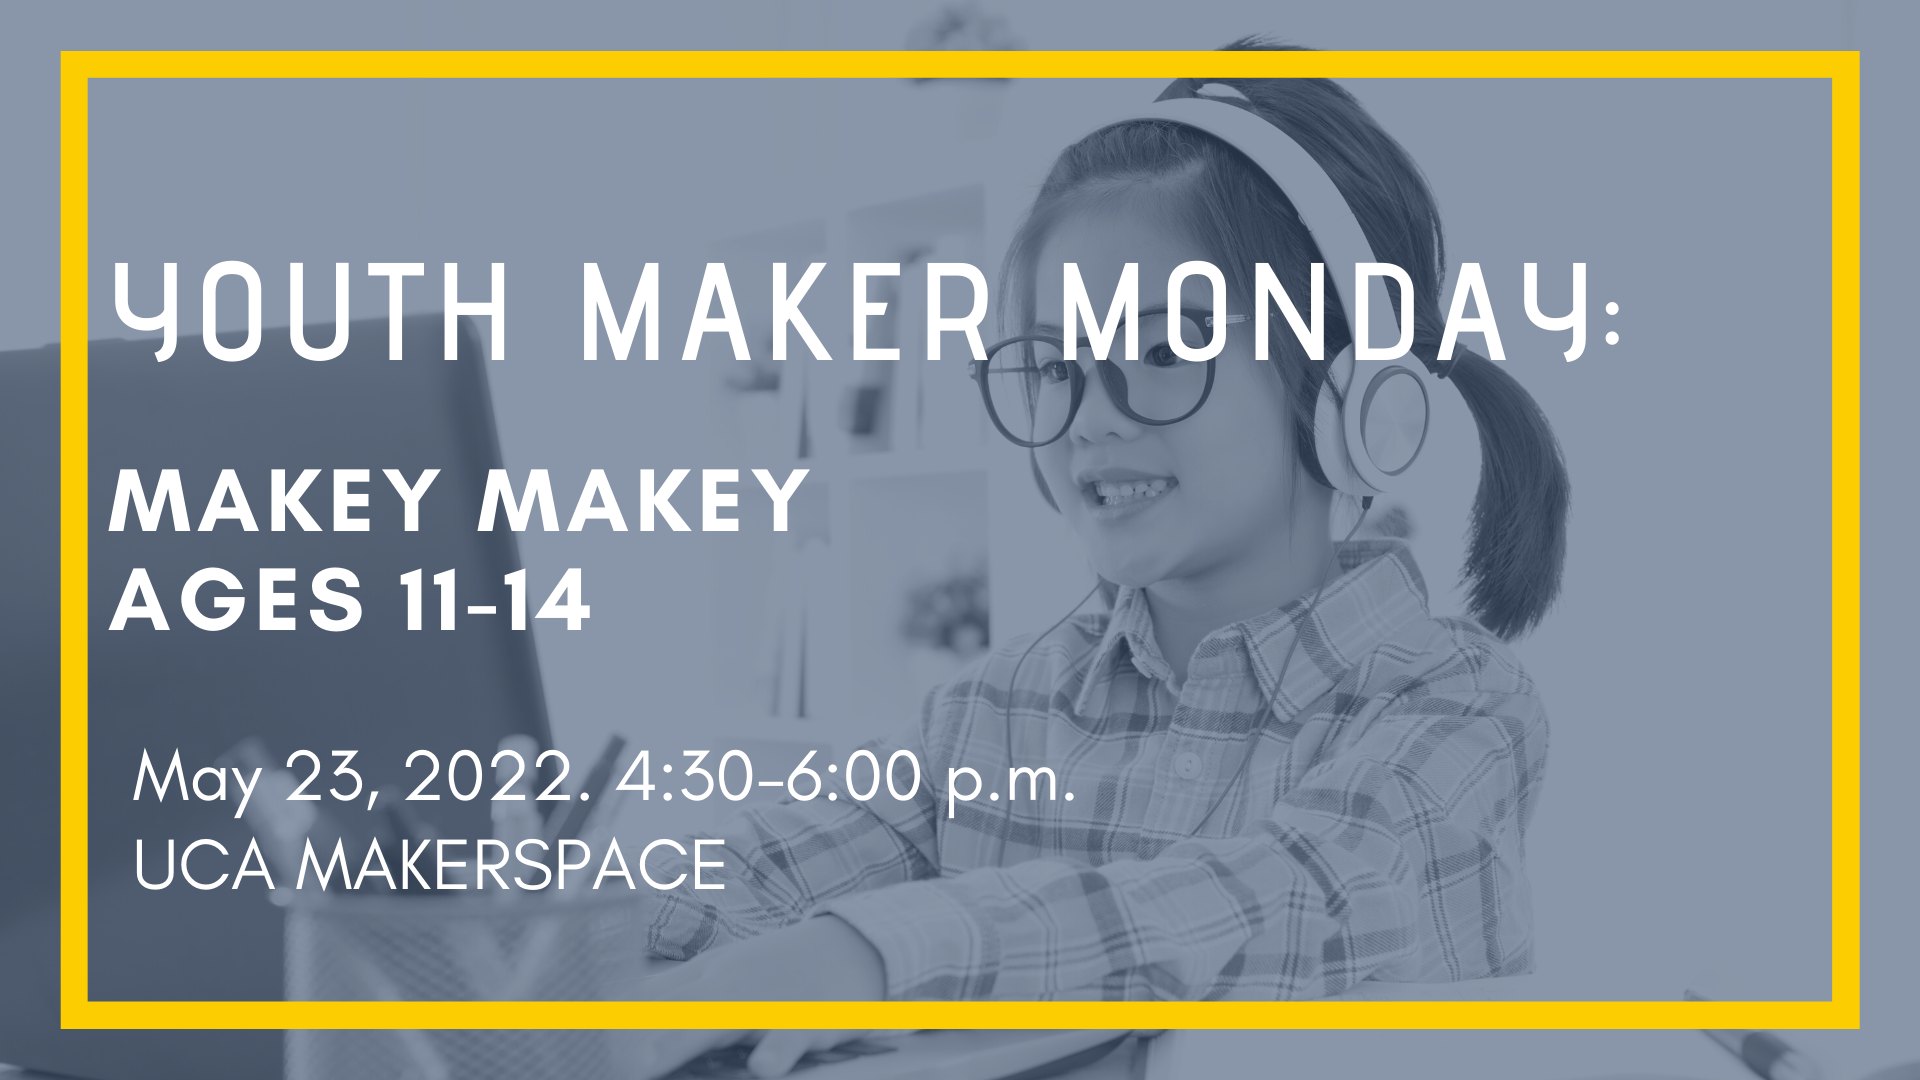 Youth Maker Monday: Makey Makey